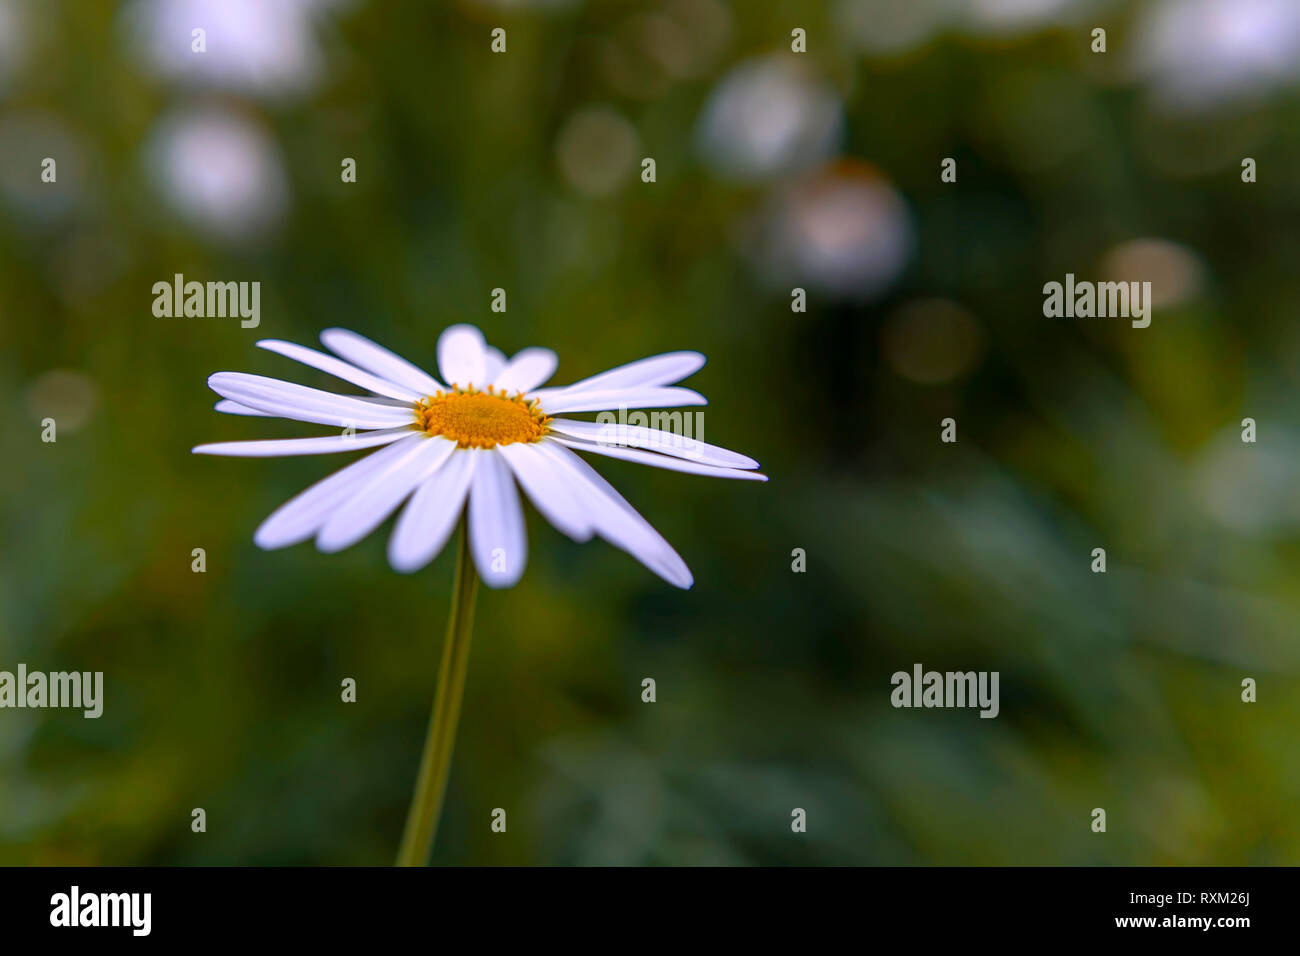 Macro image of white daisy flower on green blurred background Stock Photo